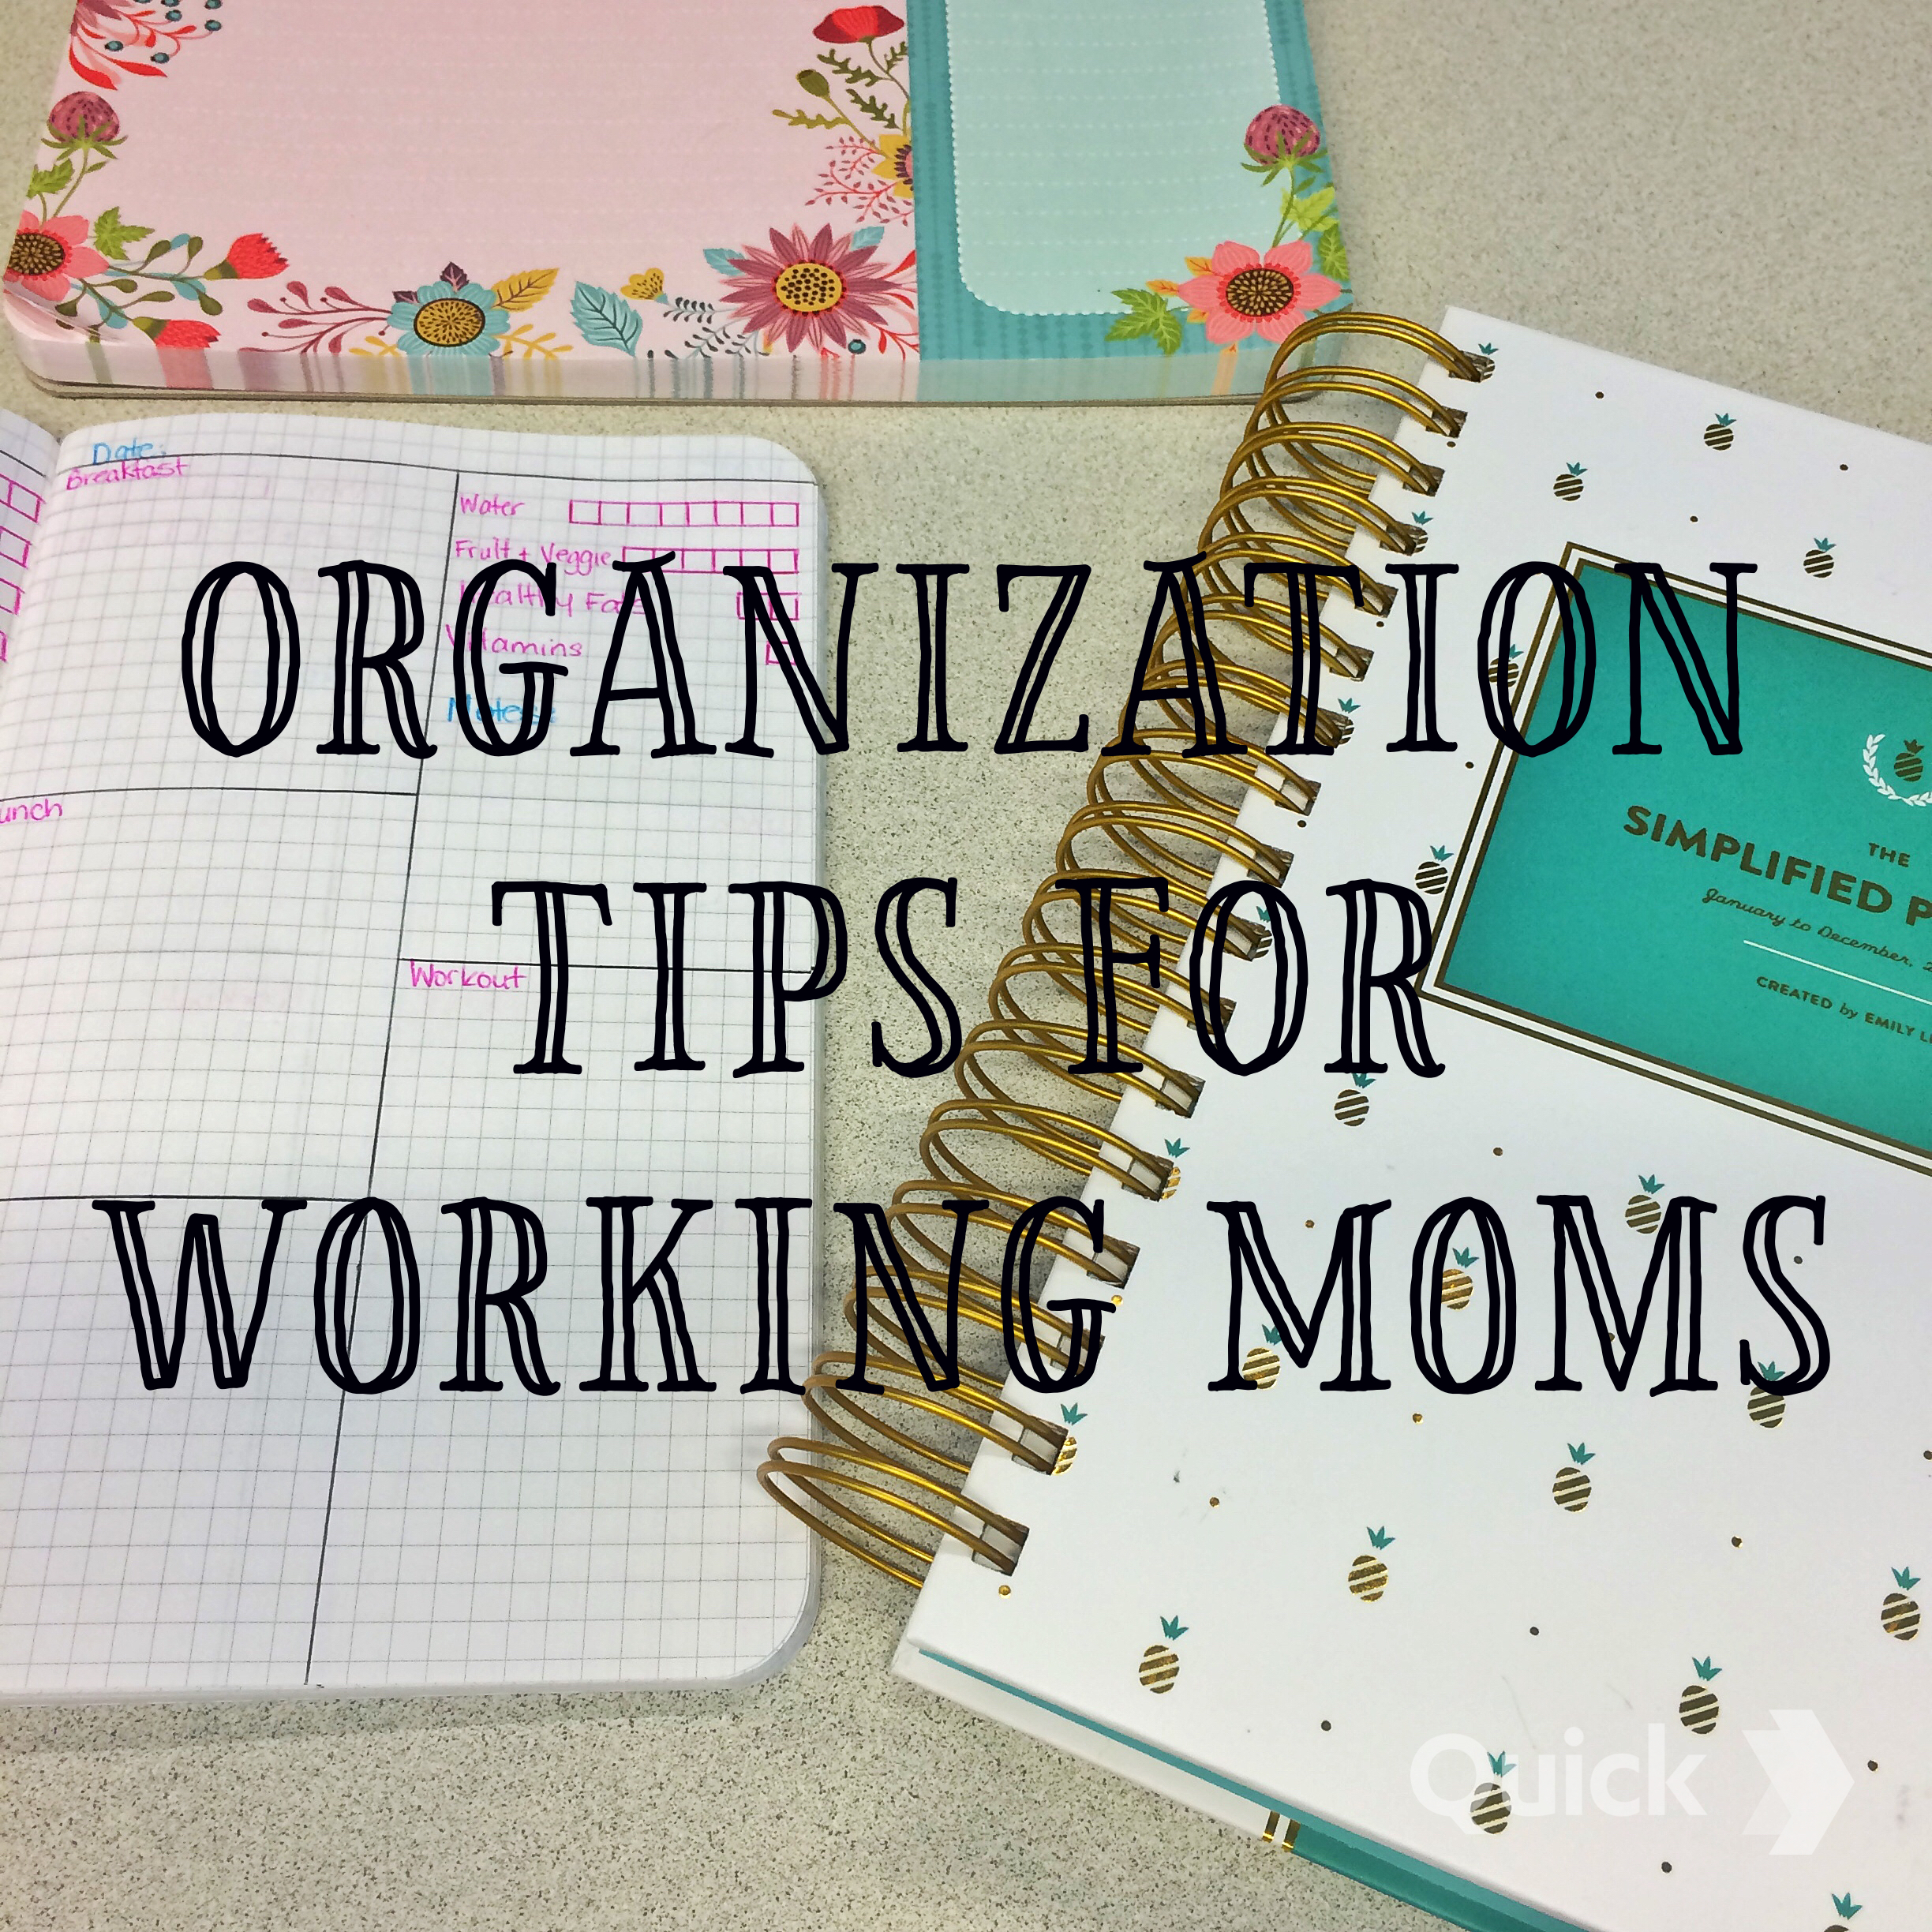 Organization Tips